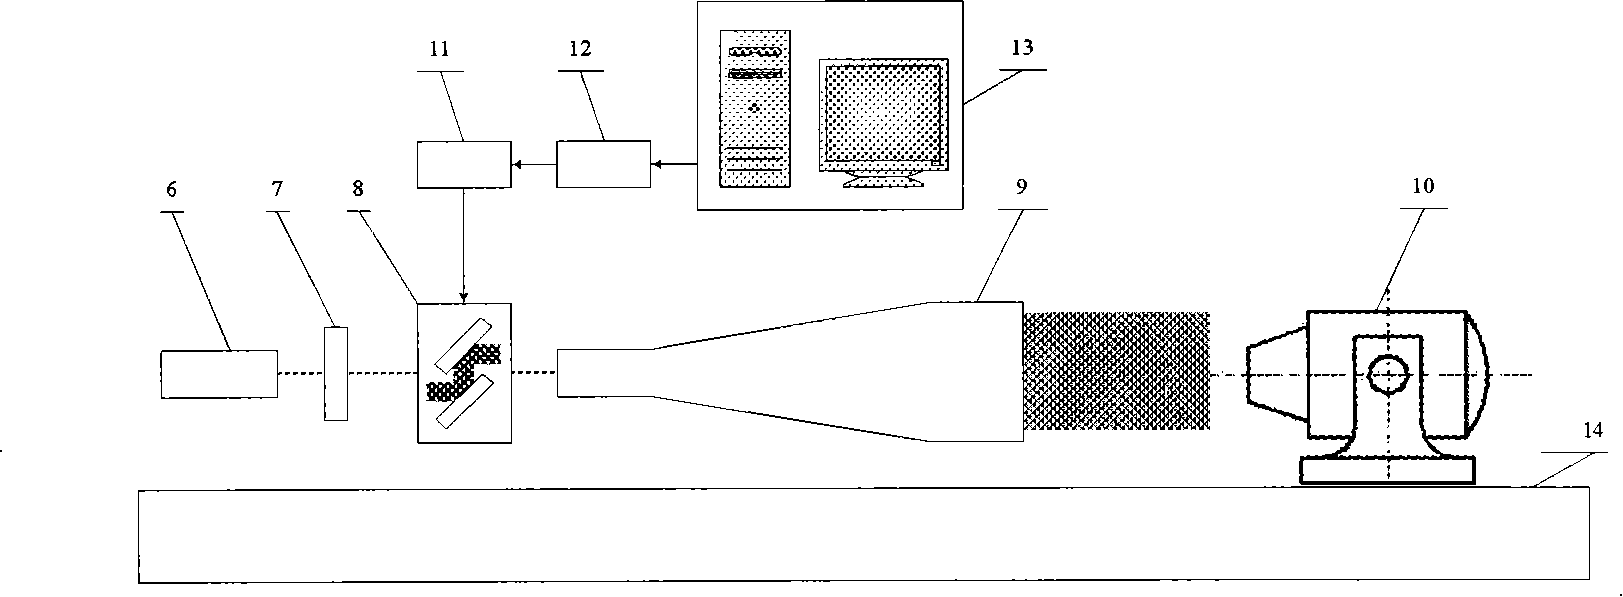 Optical profiletype simulate vibration movement platform device for space laser communication